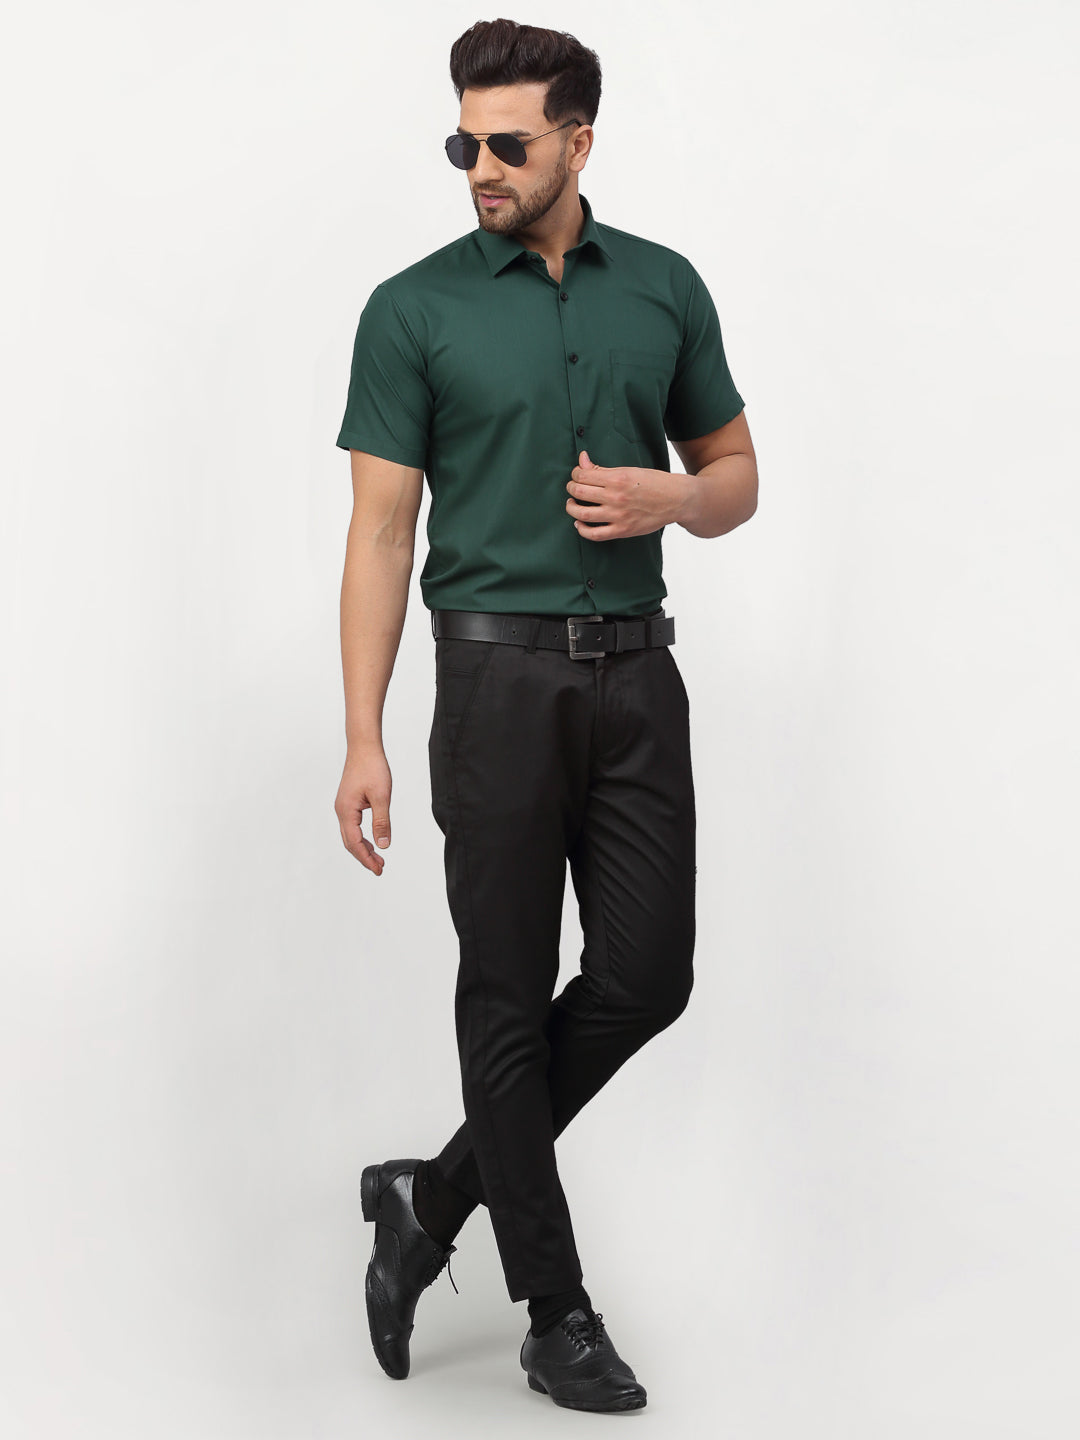 Men's Olive Cotton Half Sleeves Solid Formal Shirts ( SF 754Olive ) - Jainish